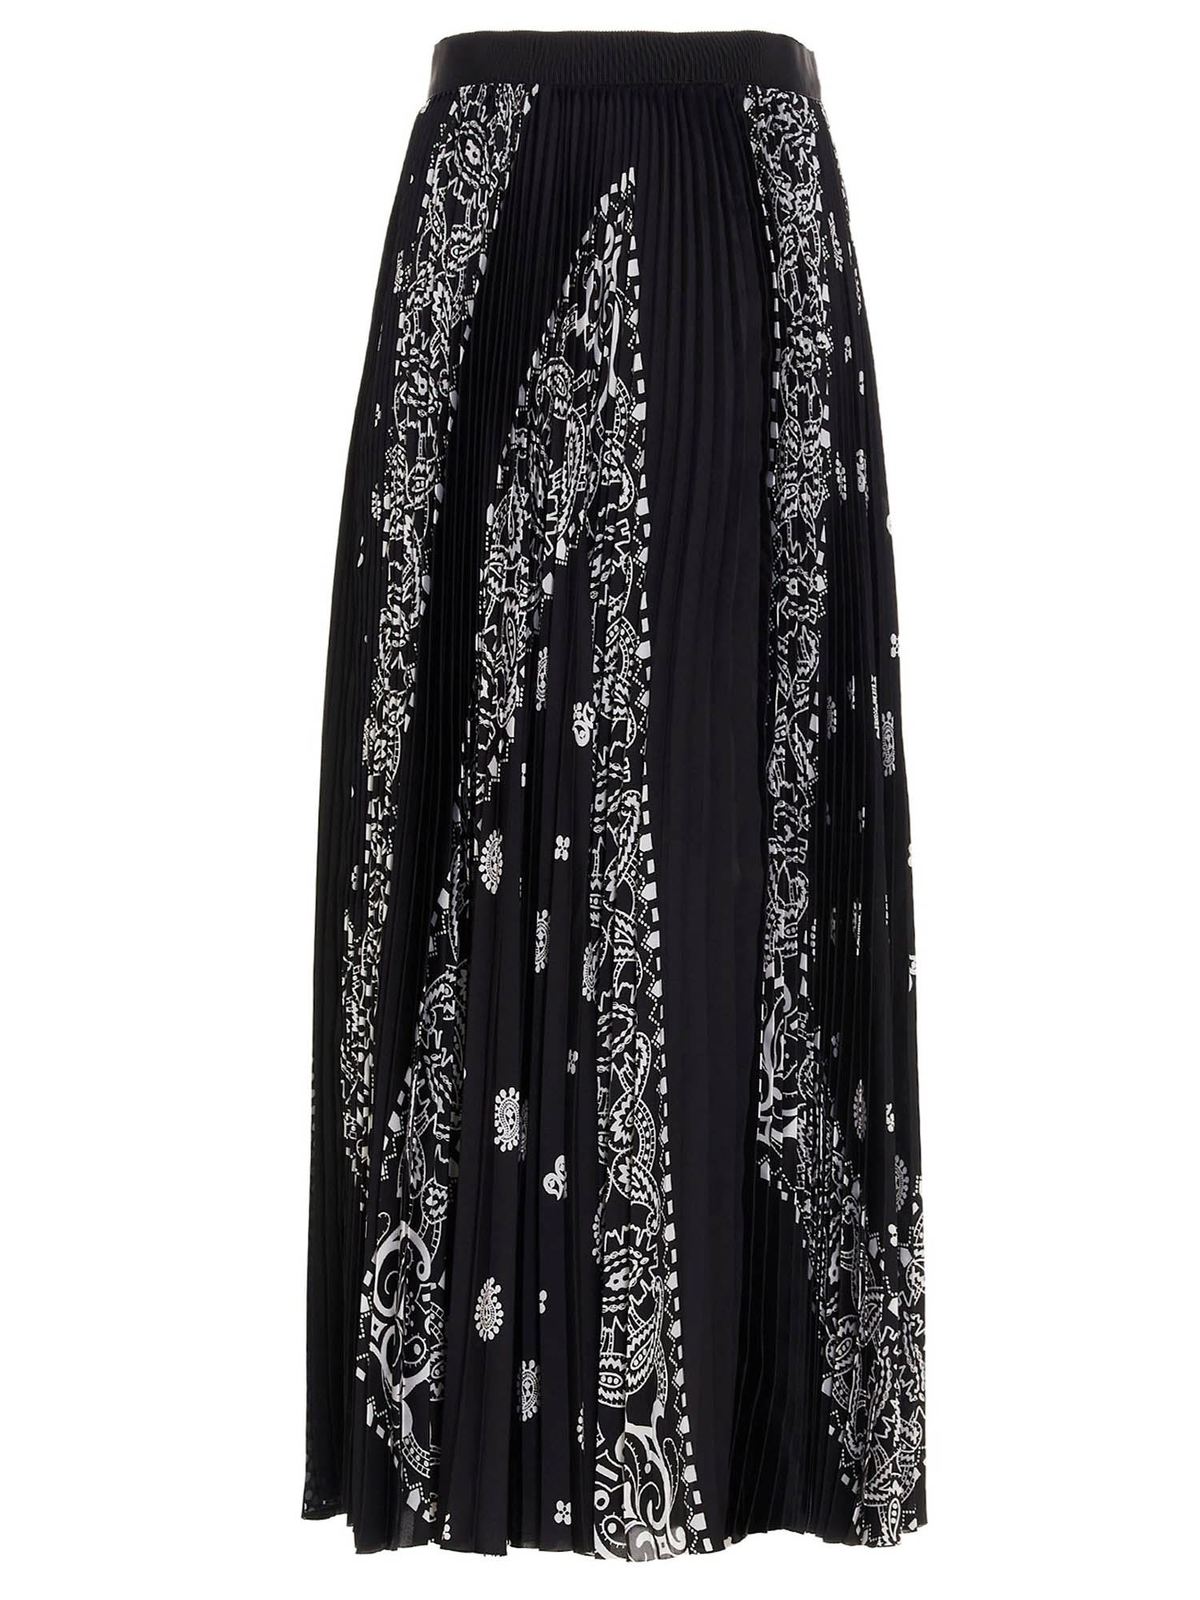 Bandana printed skirt in black